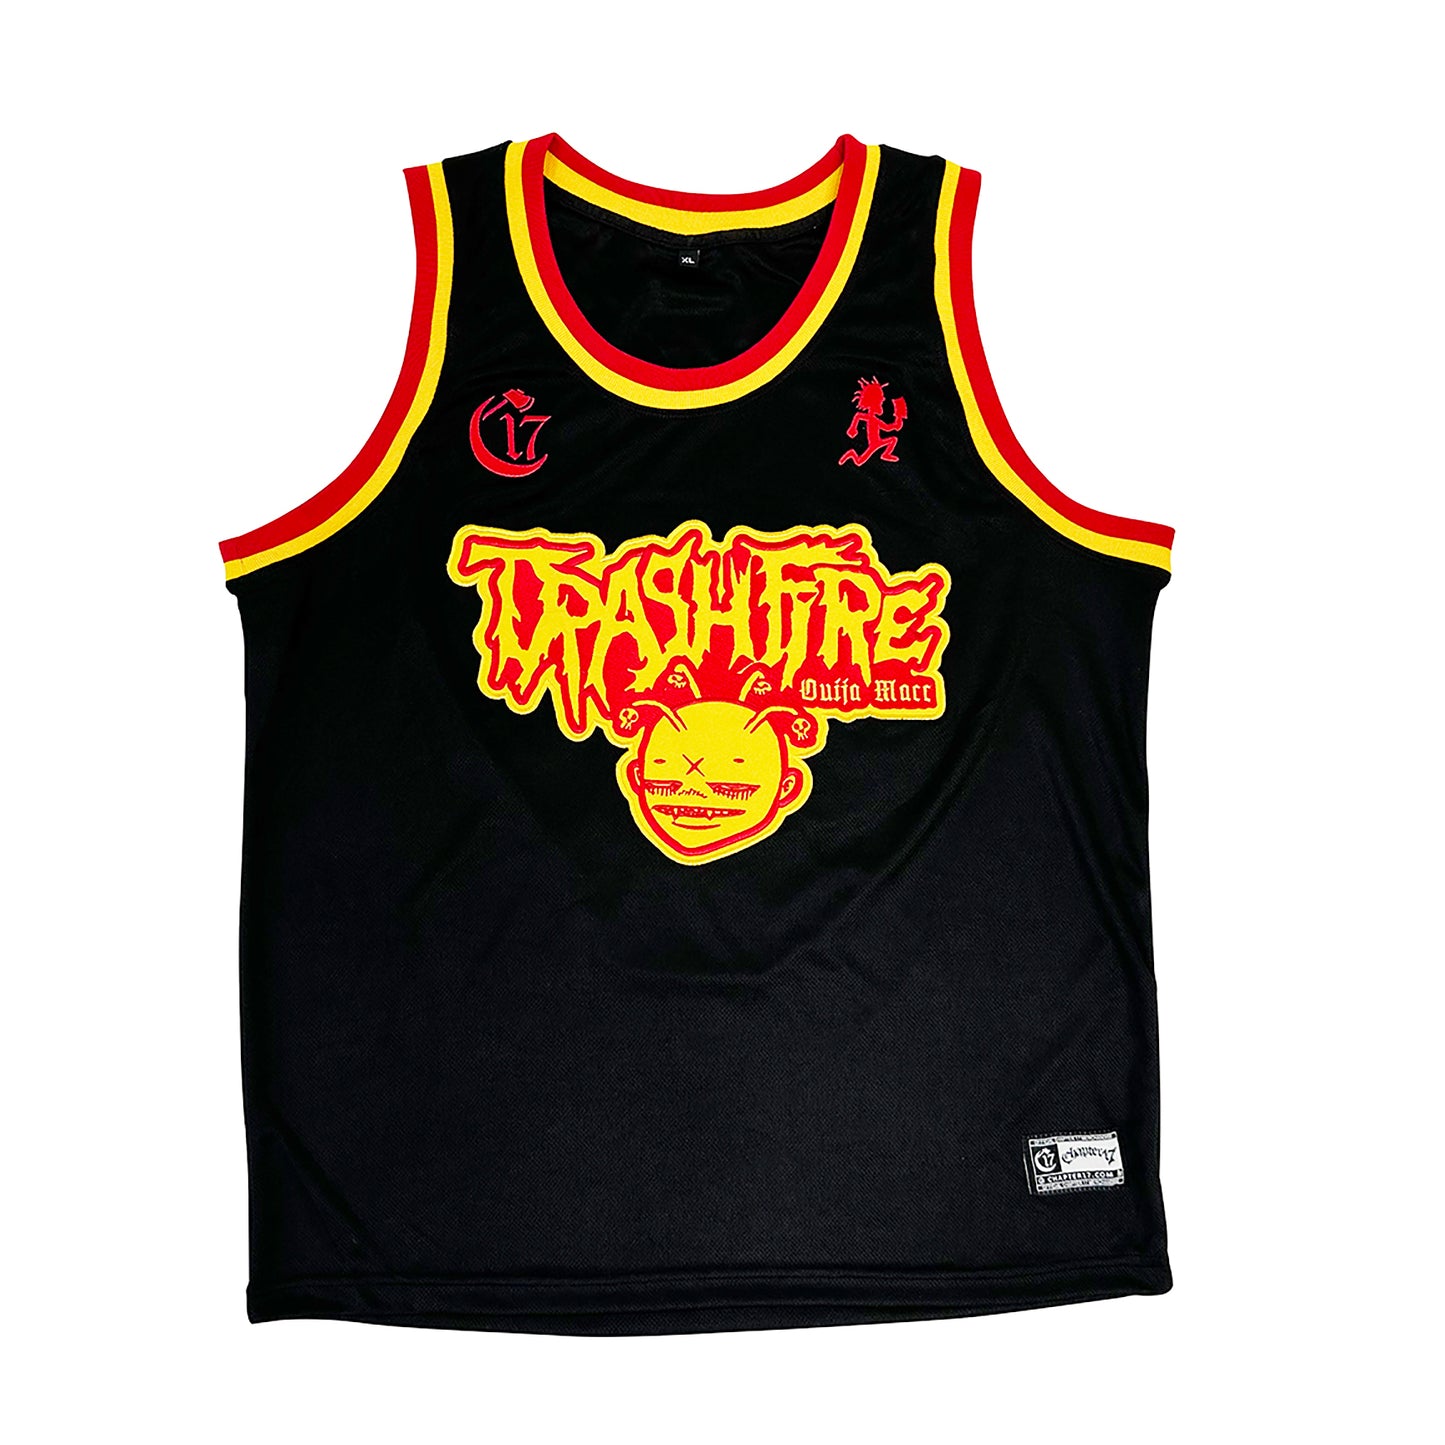 Official Ouija Macc Basketball jersey - Trashfire[RUNS SMALL ORDER A SIZE UP]